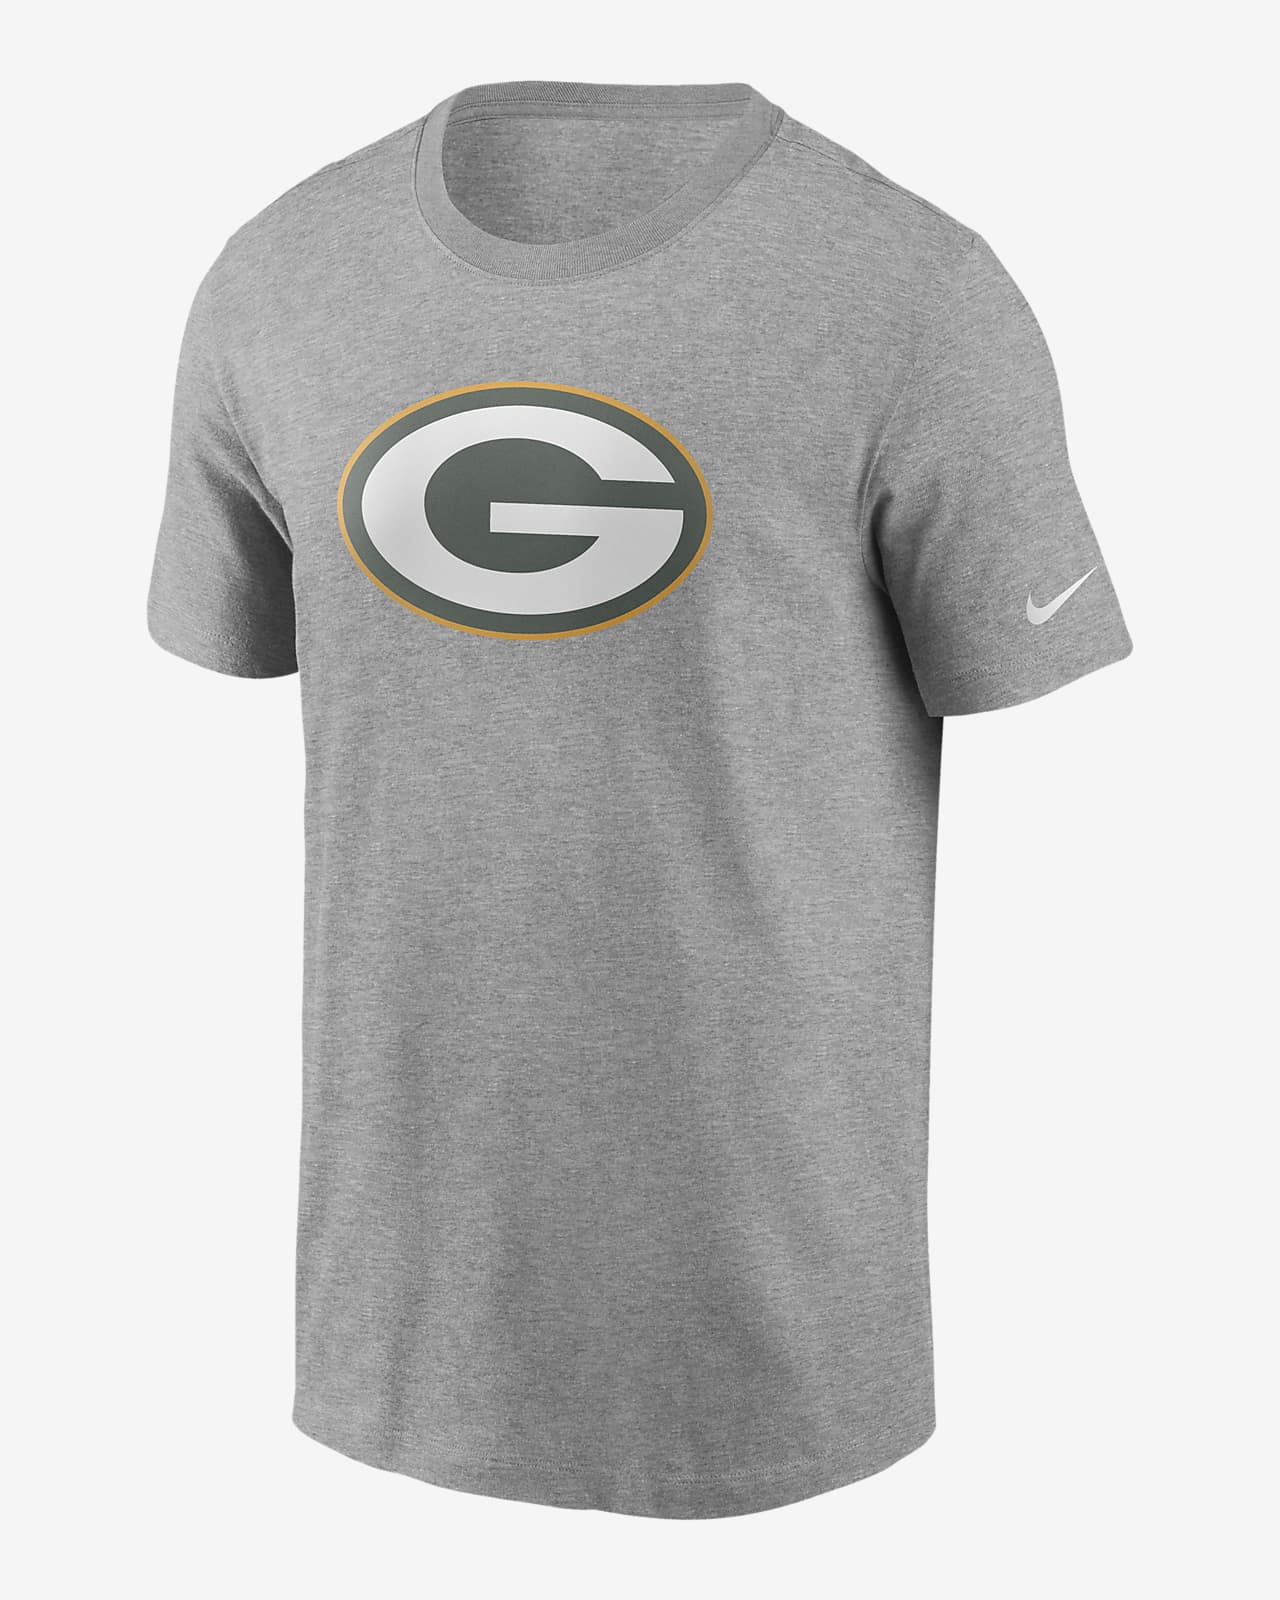 Playera para hombre Nike Logo Essential (NFL Green Bay Packers)